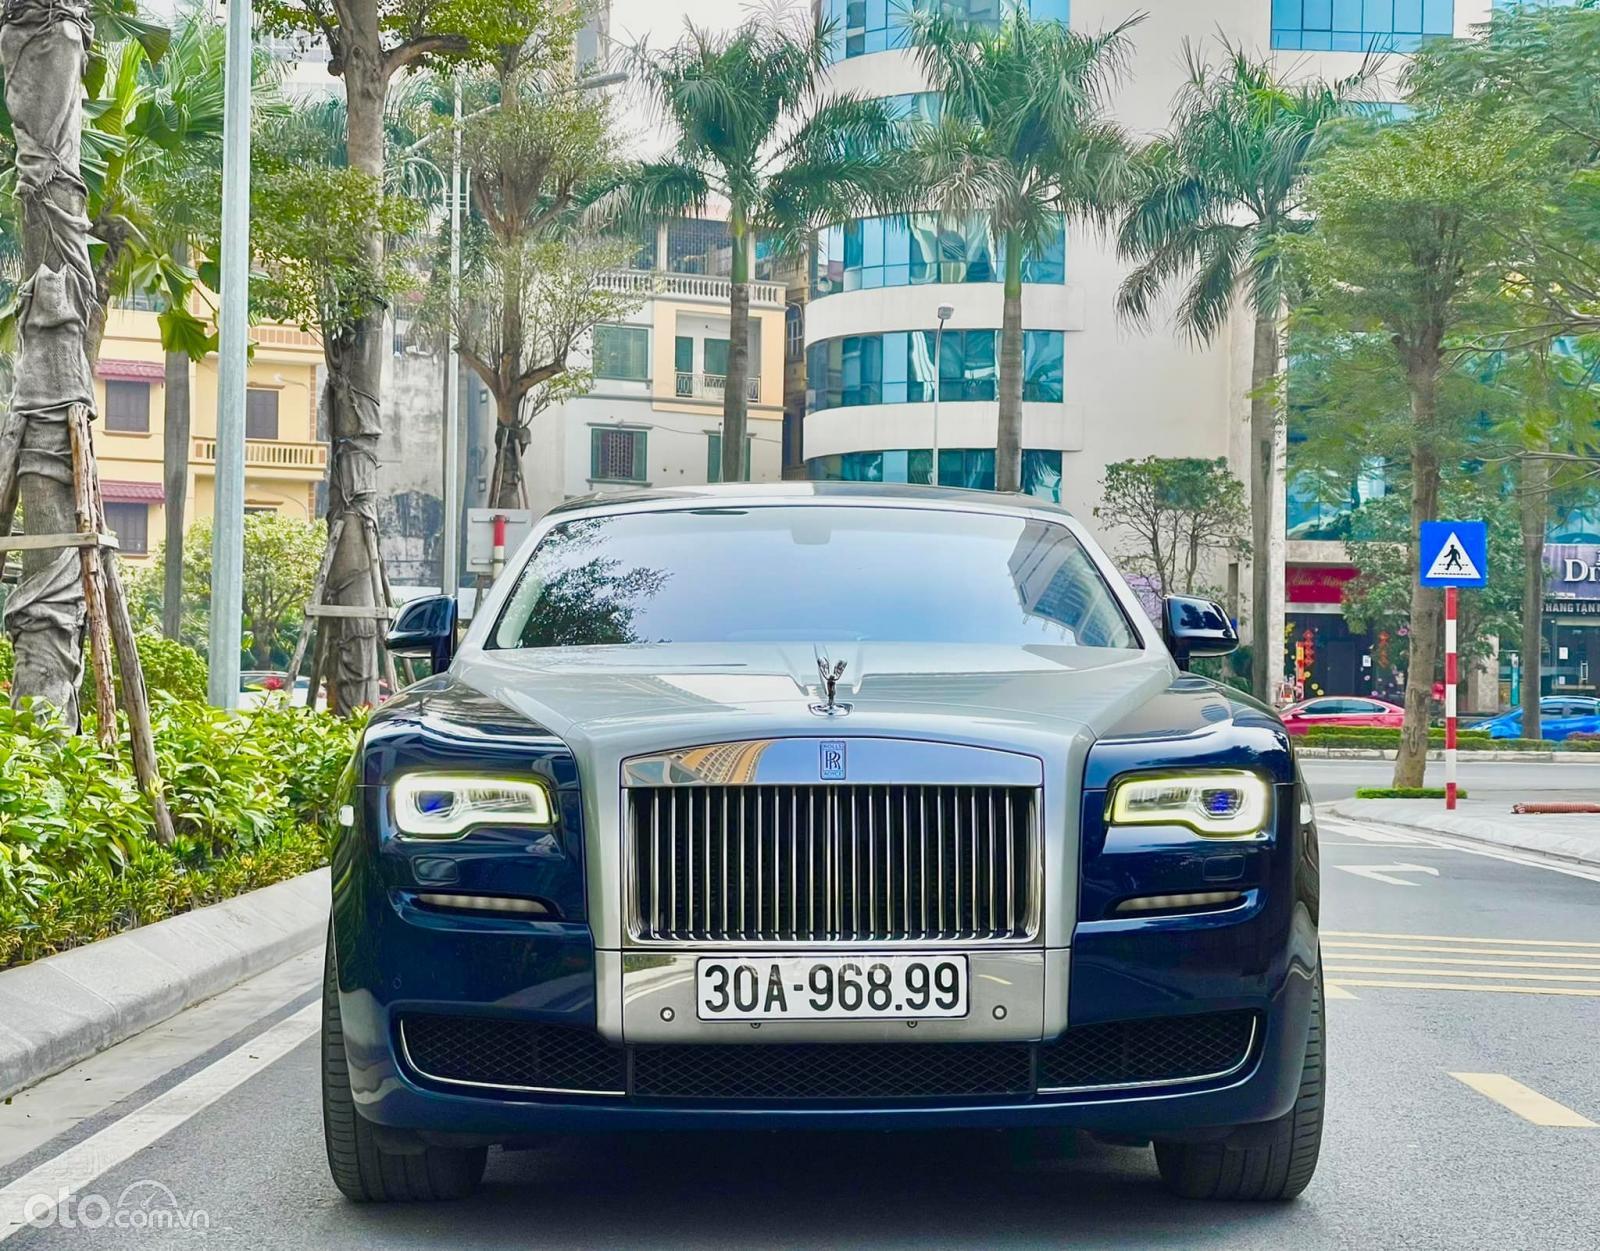 Doanh số Rolls Royce ở Trung Quốc giảm gần về 0  AutoMotorVN